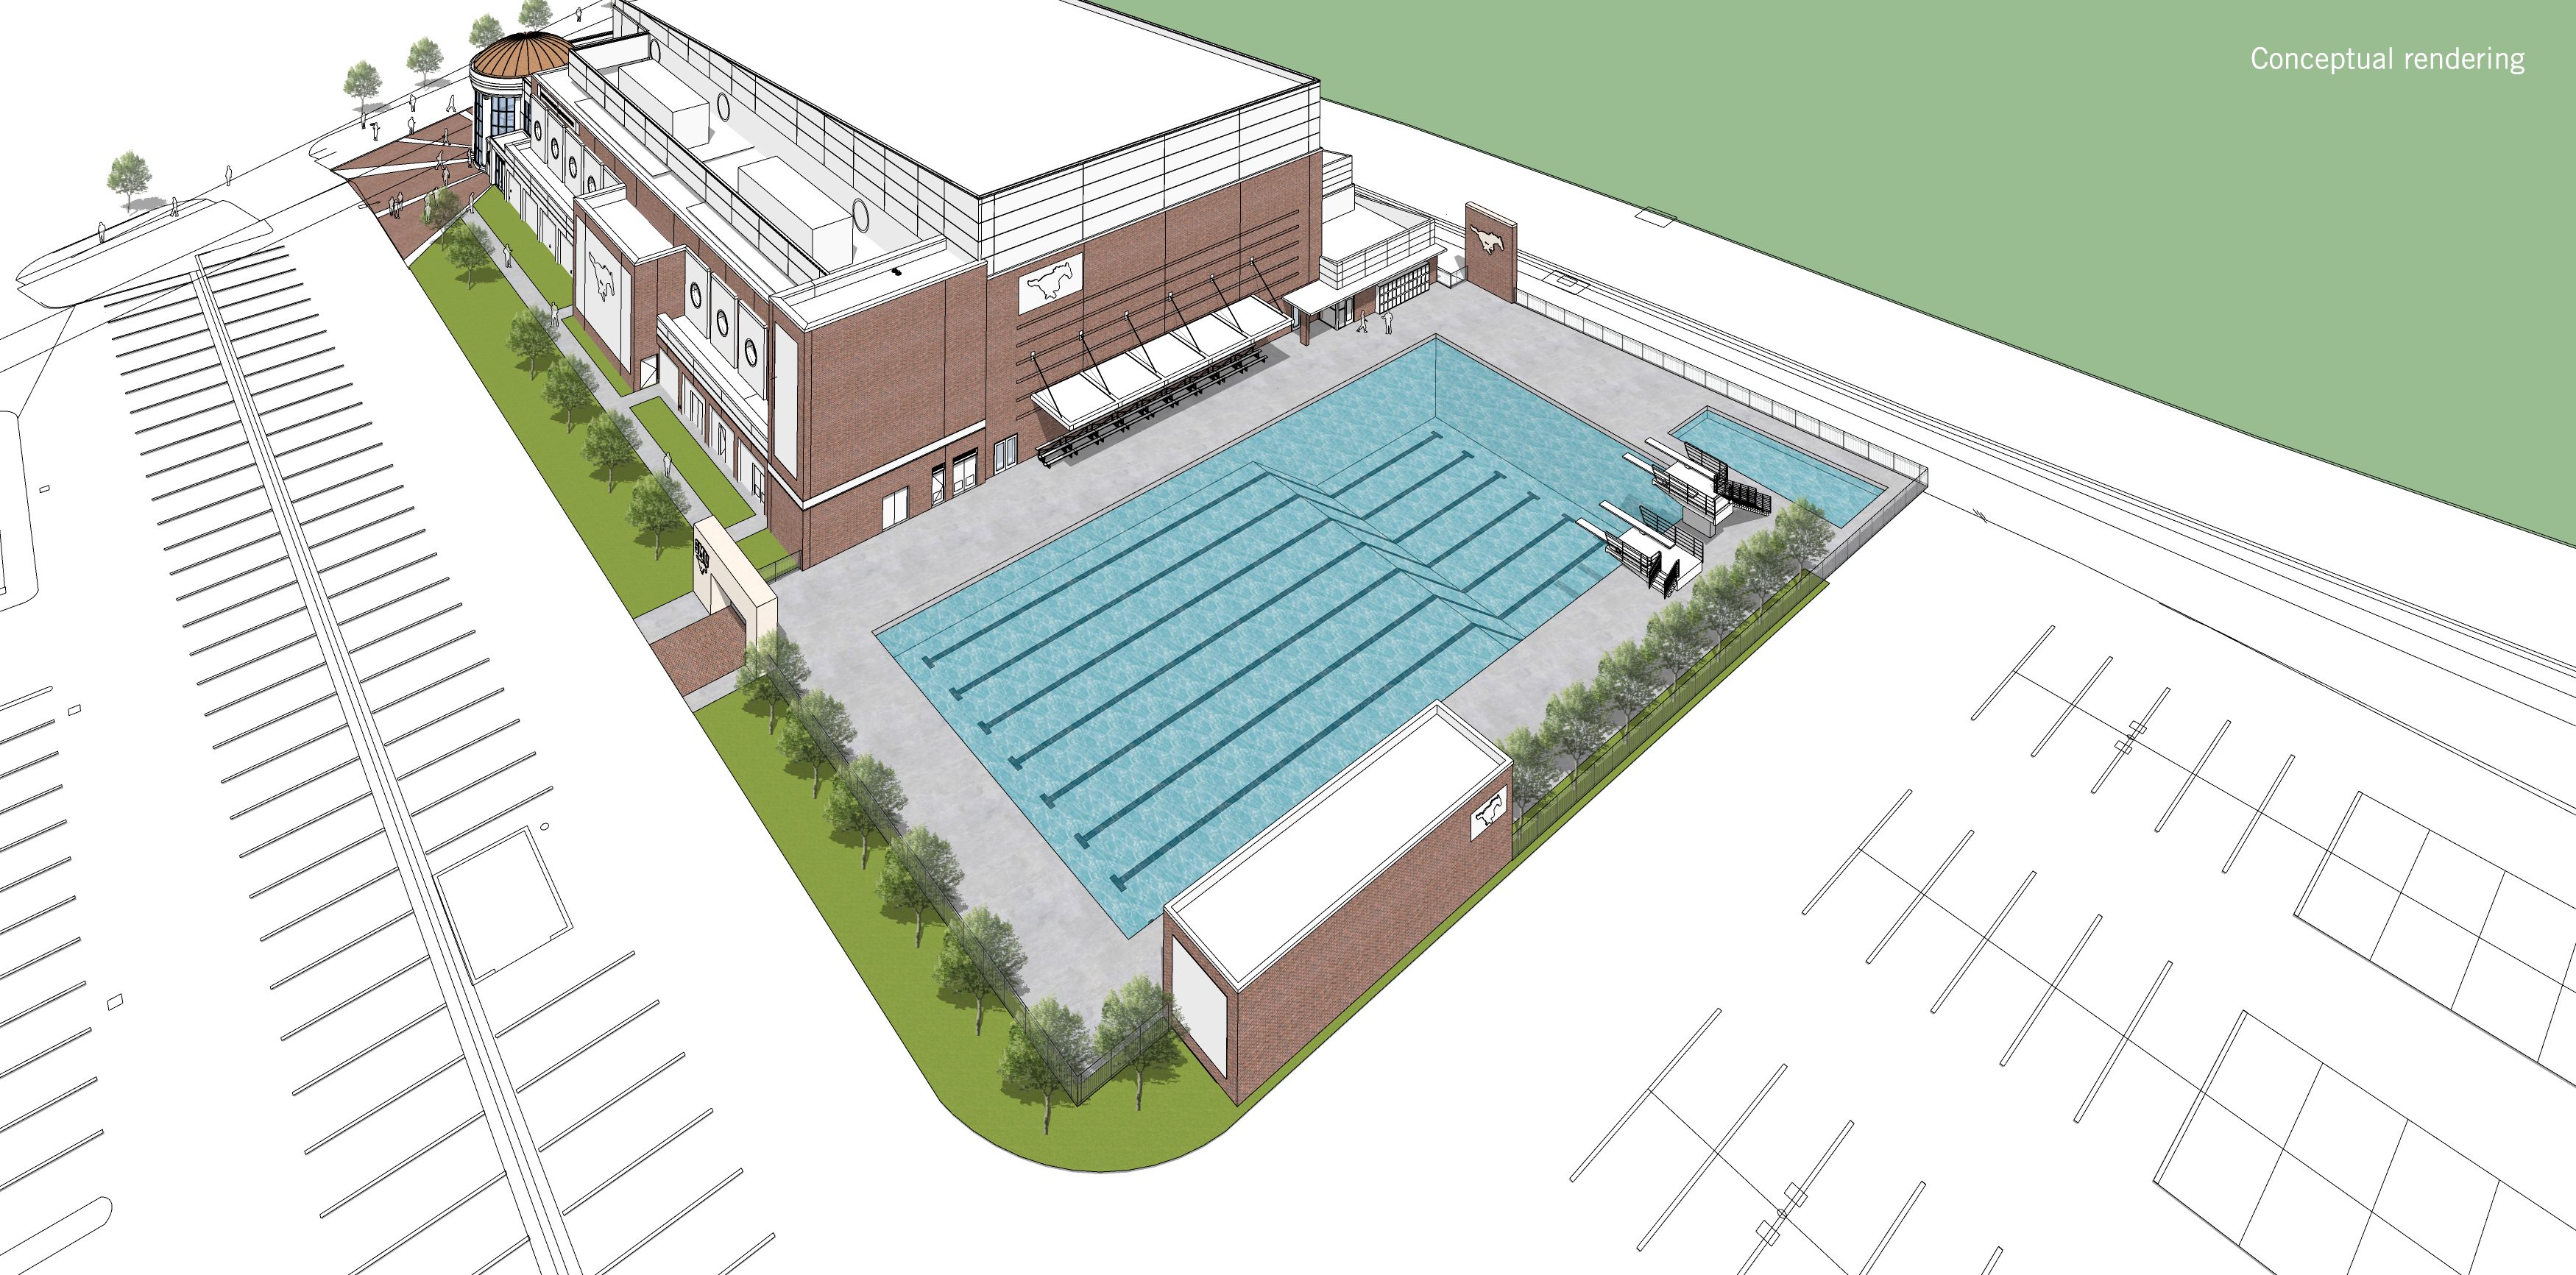 Conceptual rendering of outdoor pool